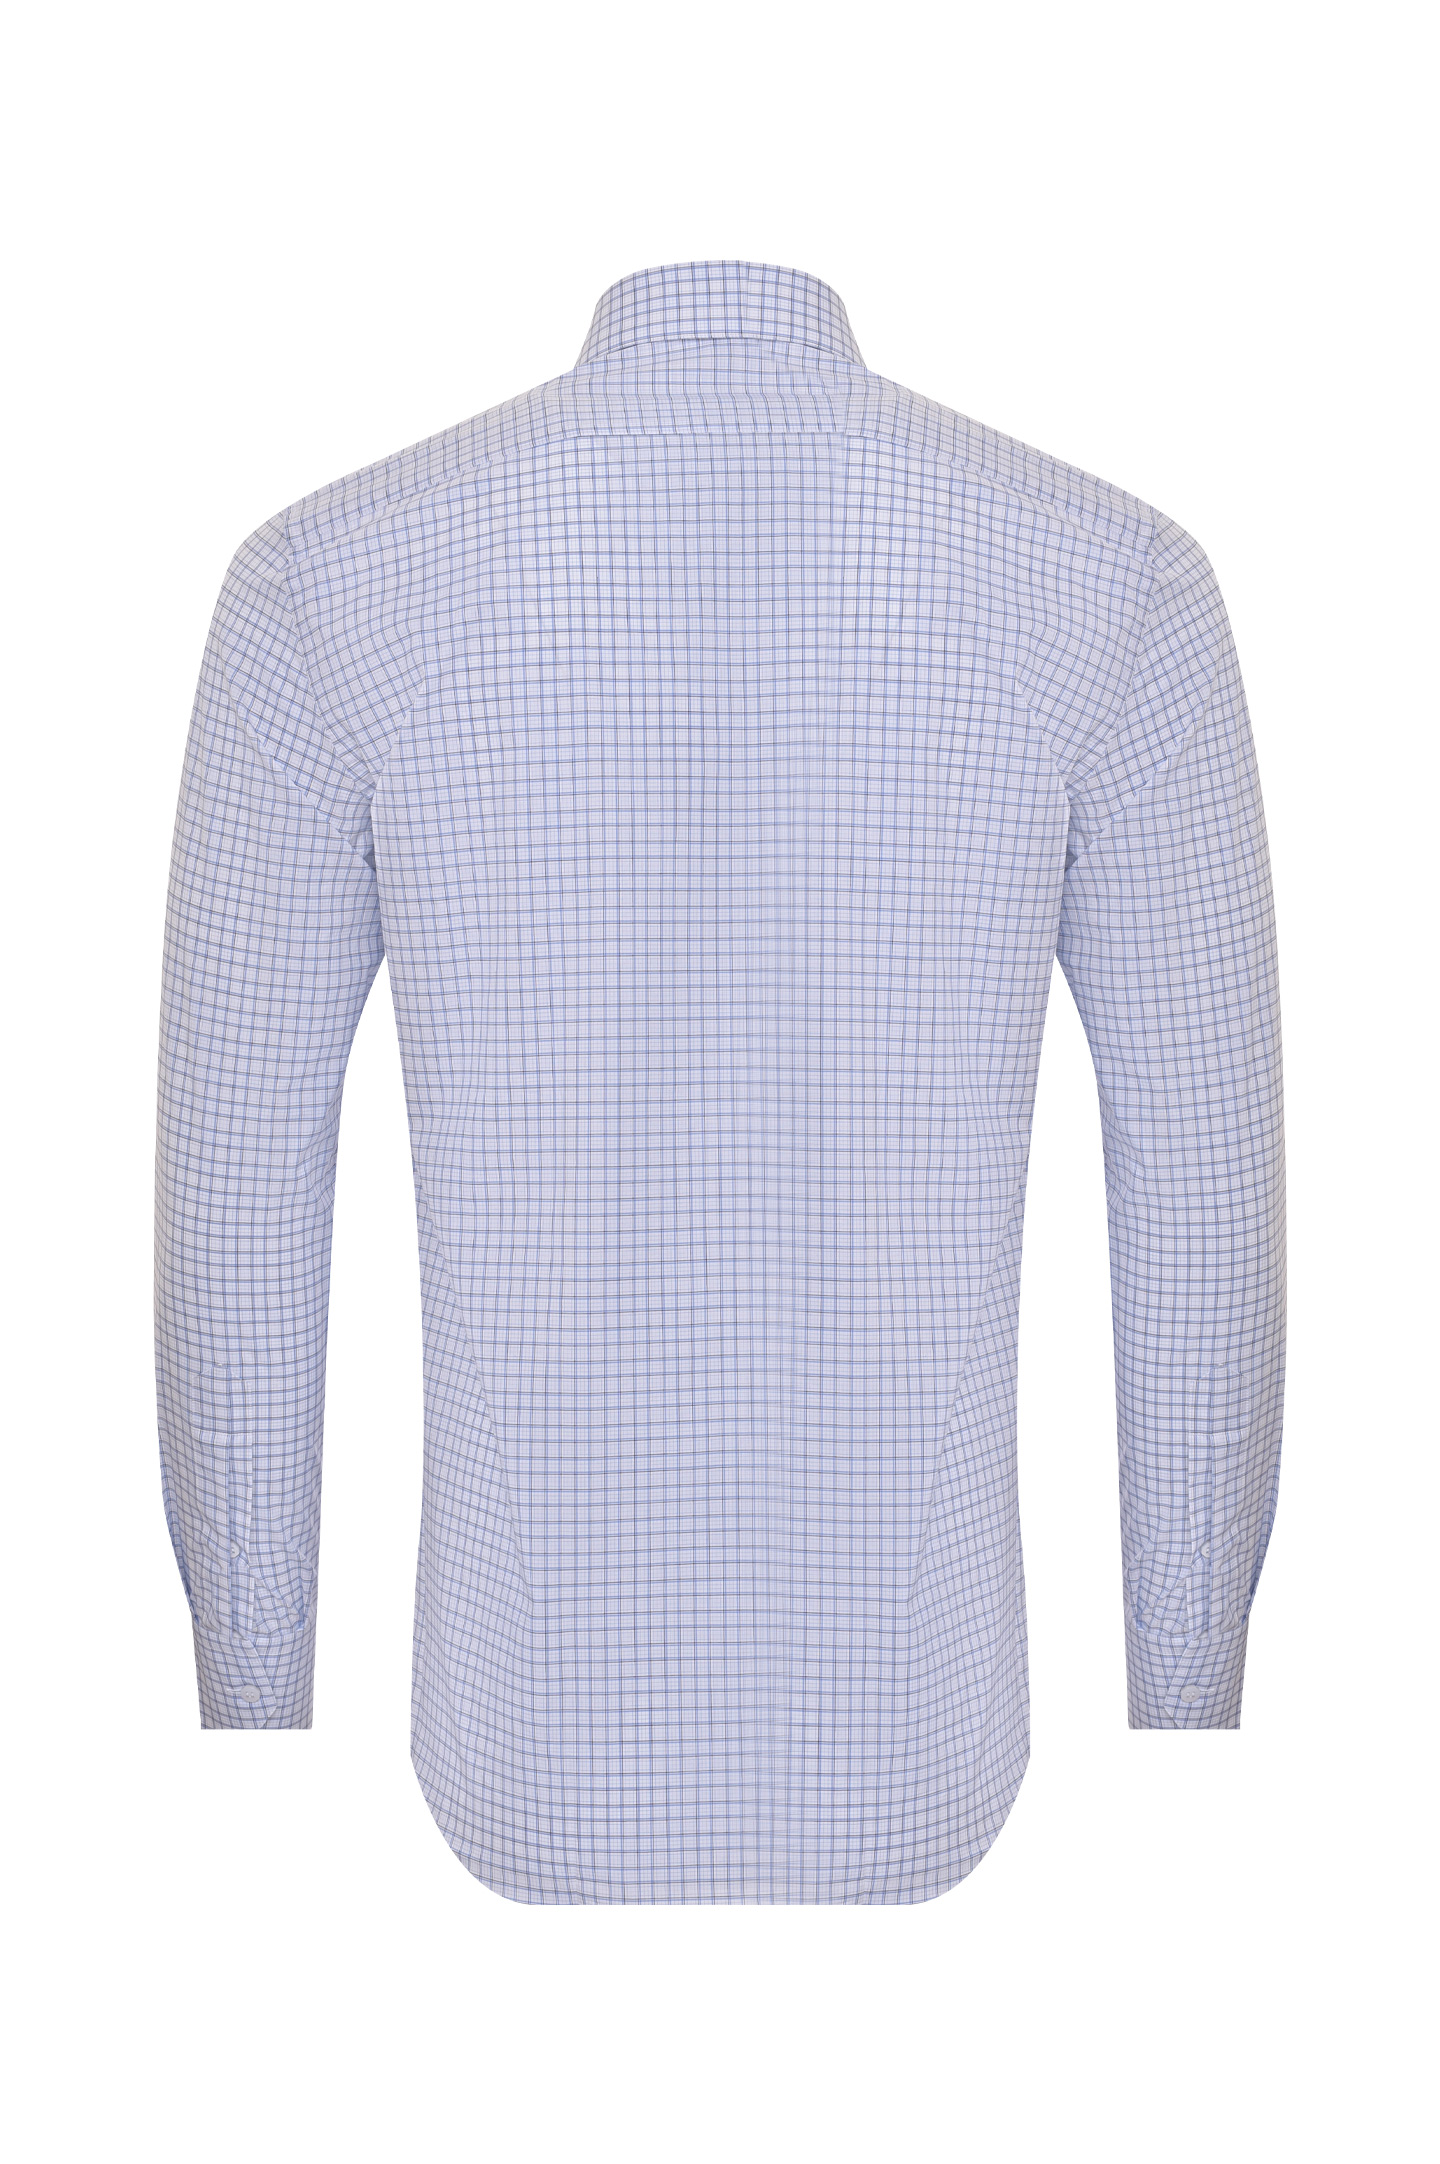 Рубашка STEFANO RICCI MC005694 L2313, цвет: Белый, Мужской